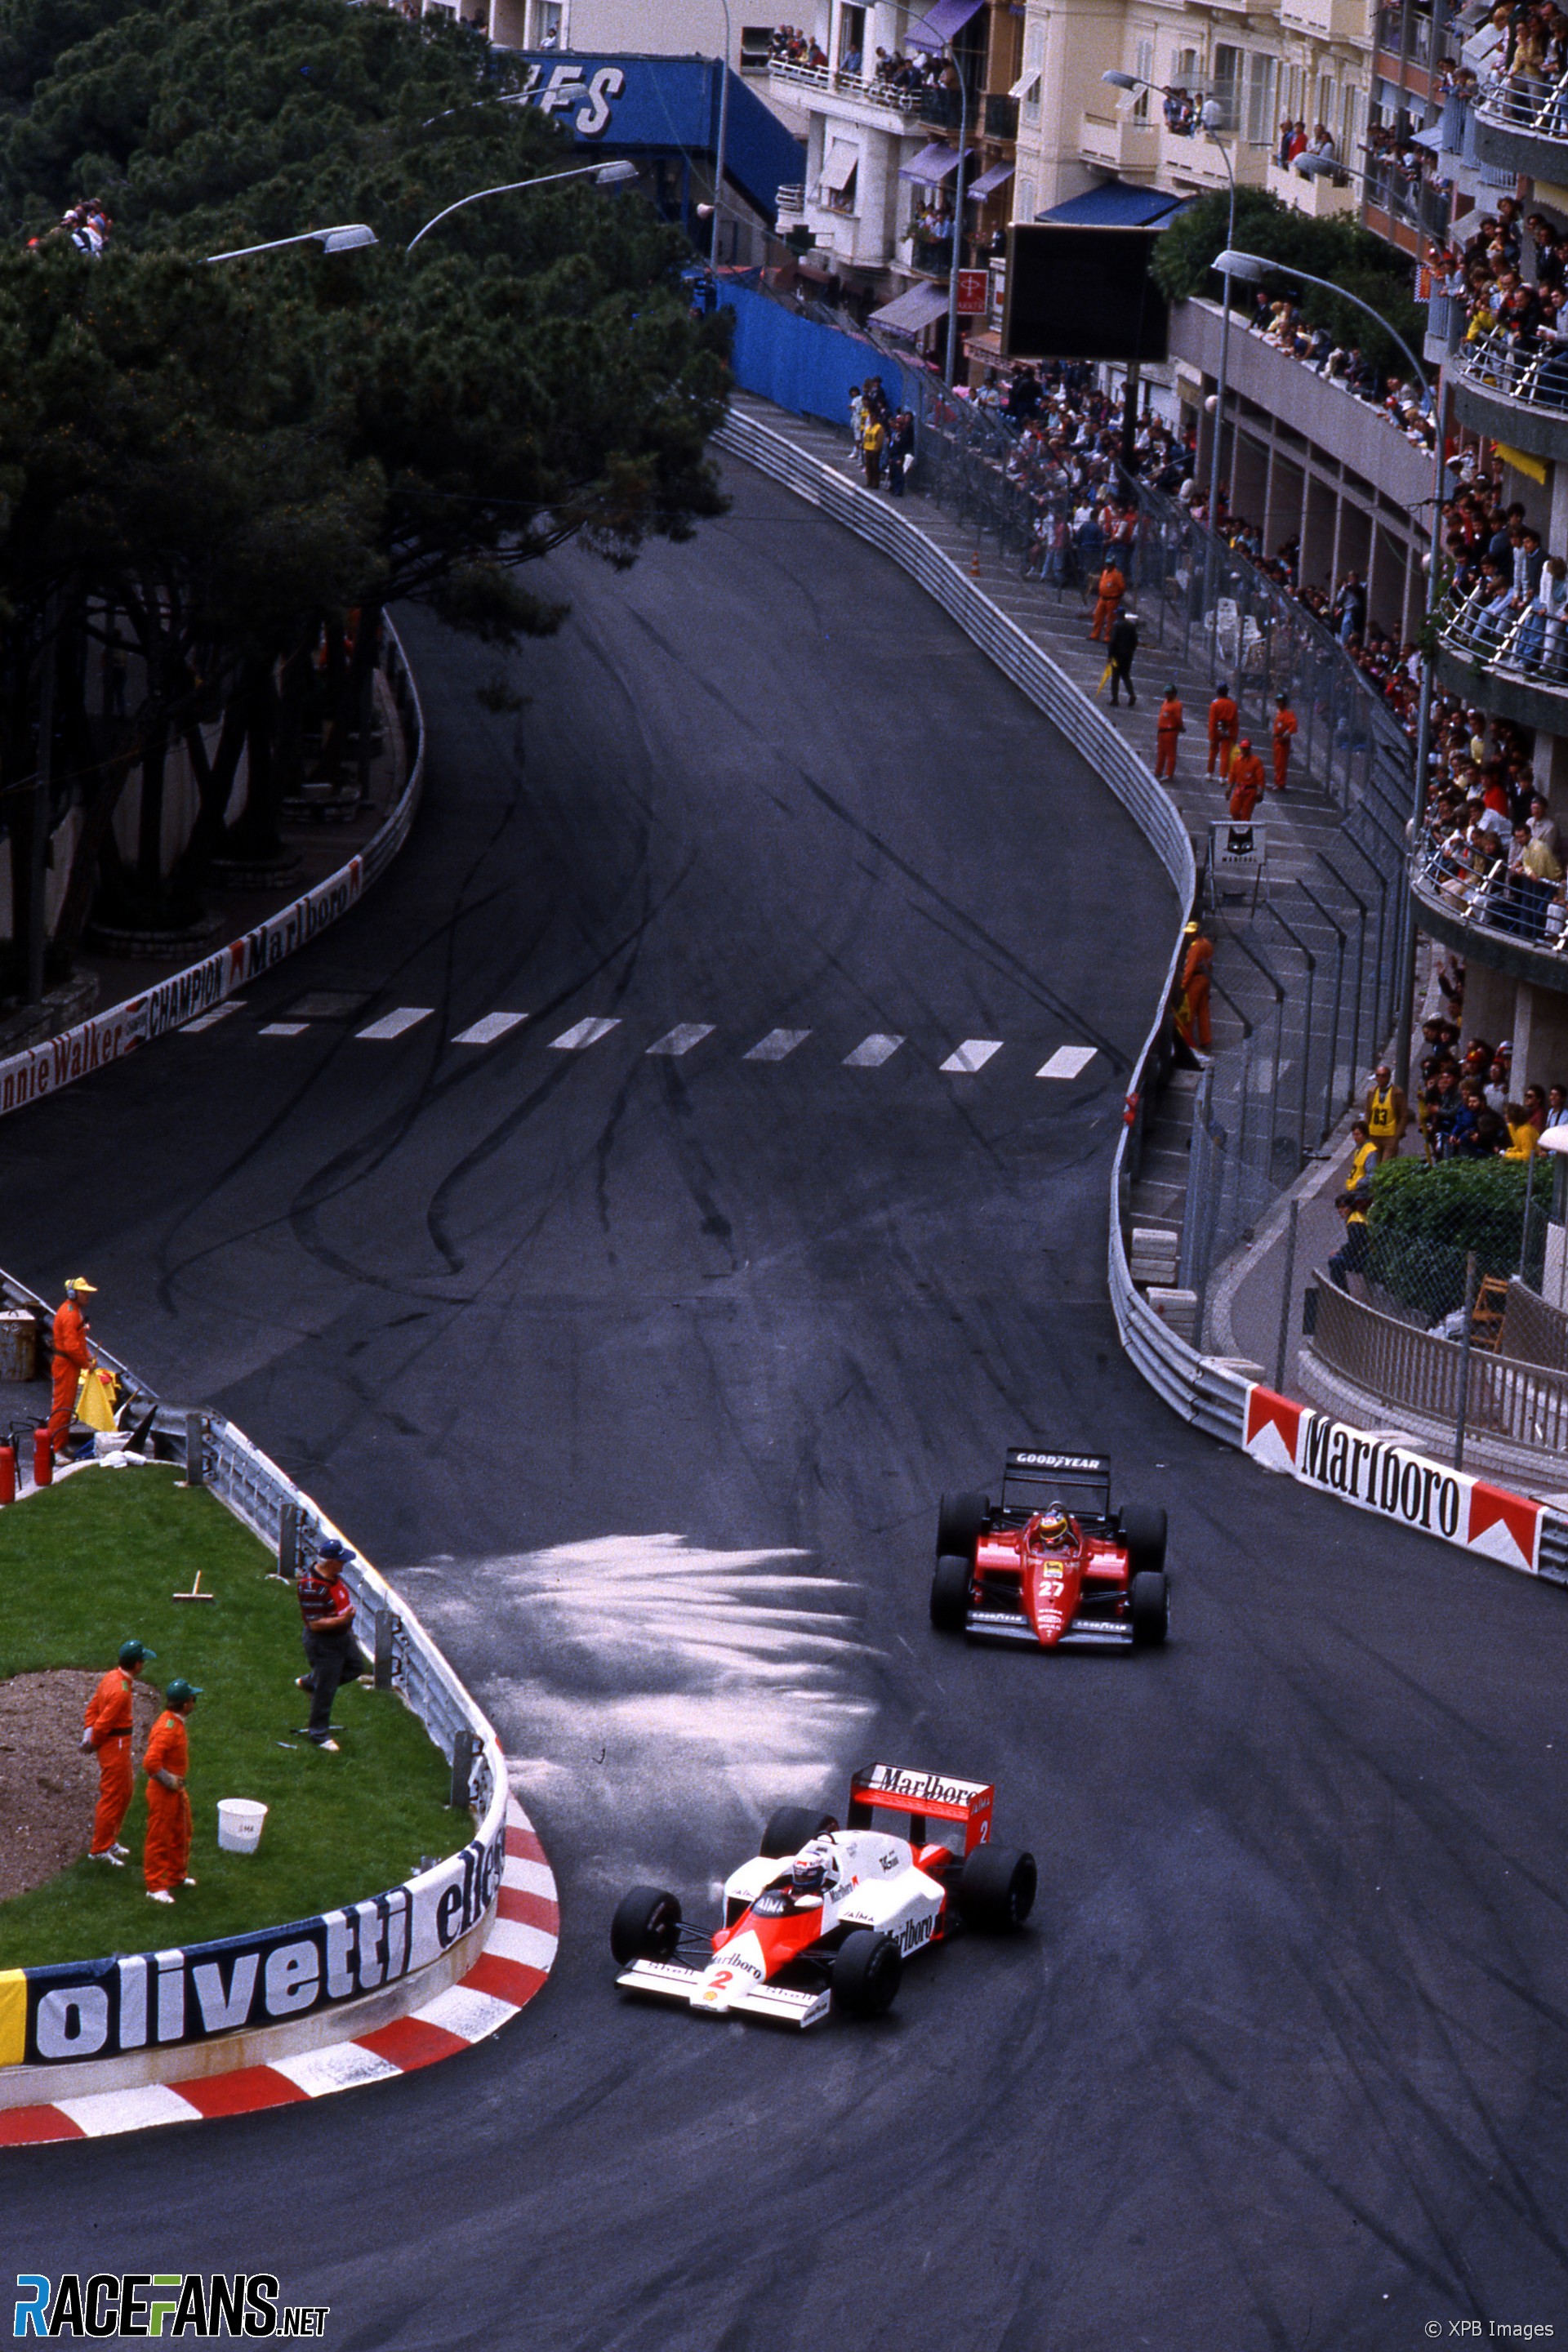 Alain Prost, Michele Alboreto, Monaco, 1985